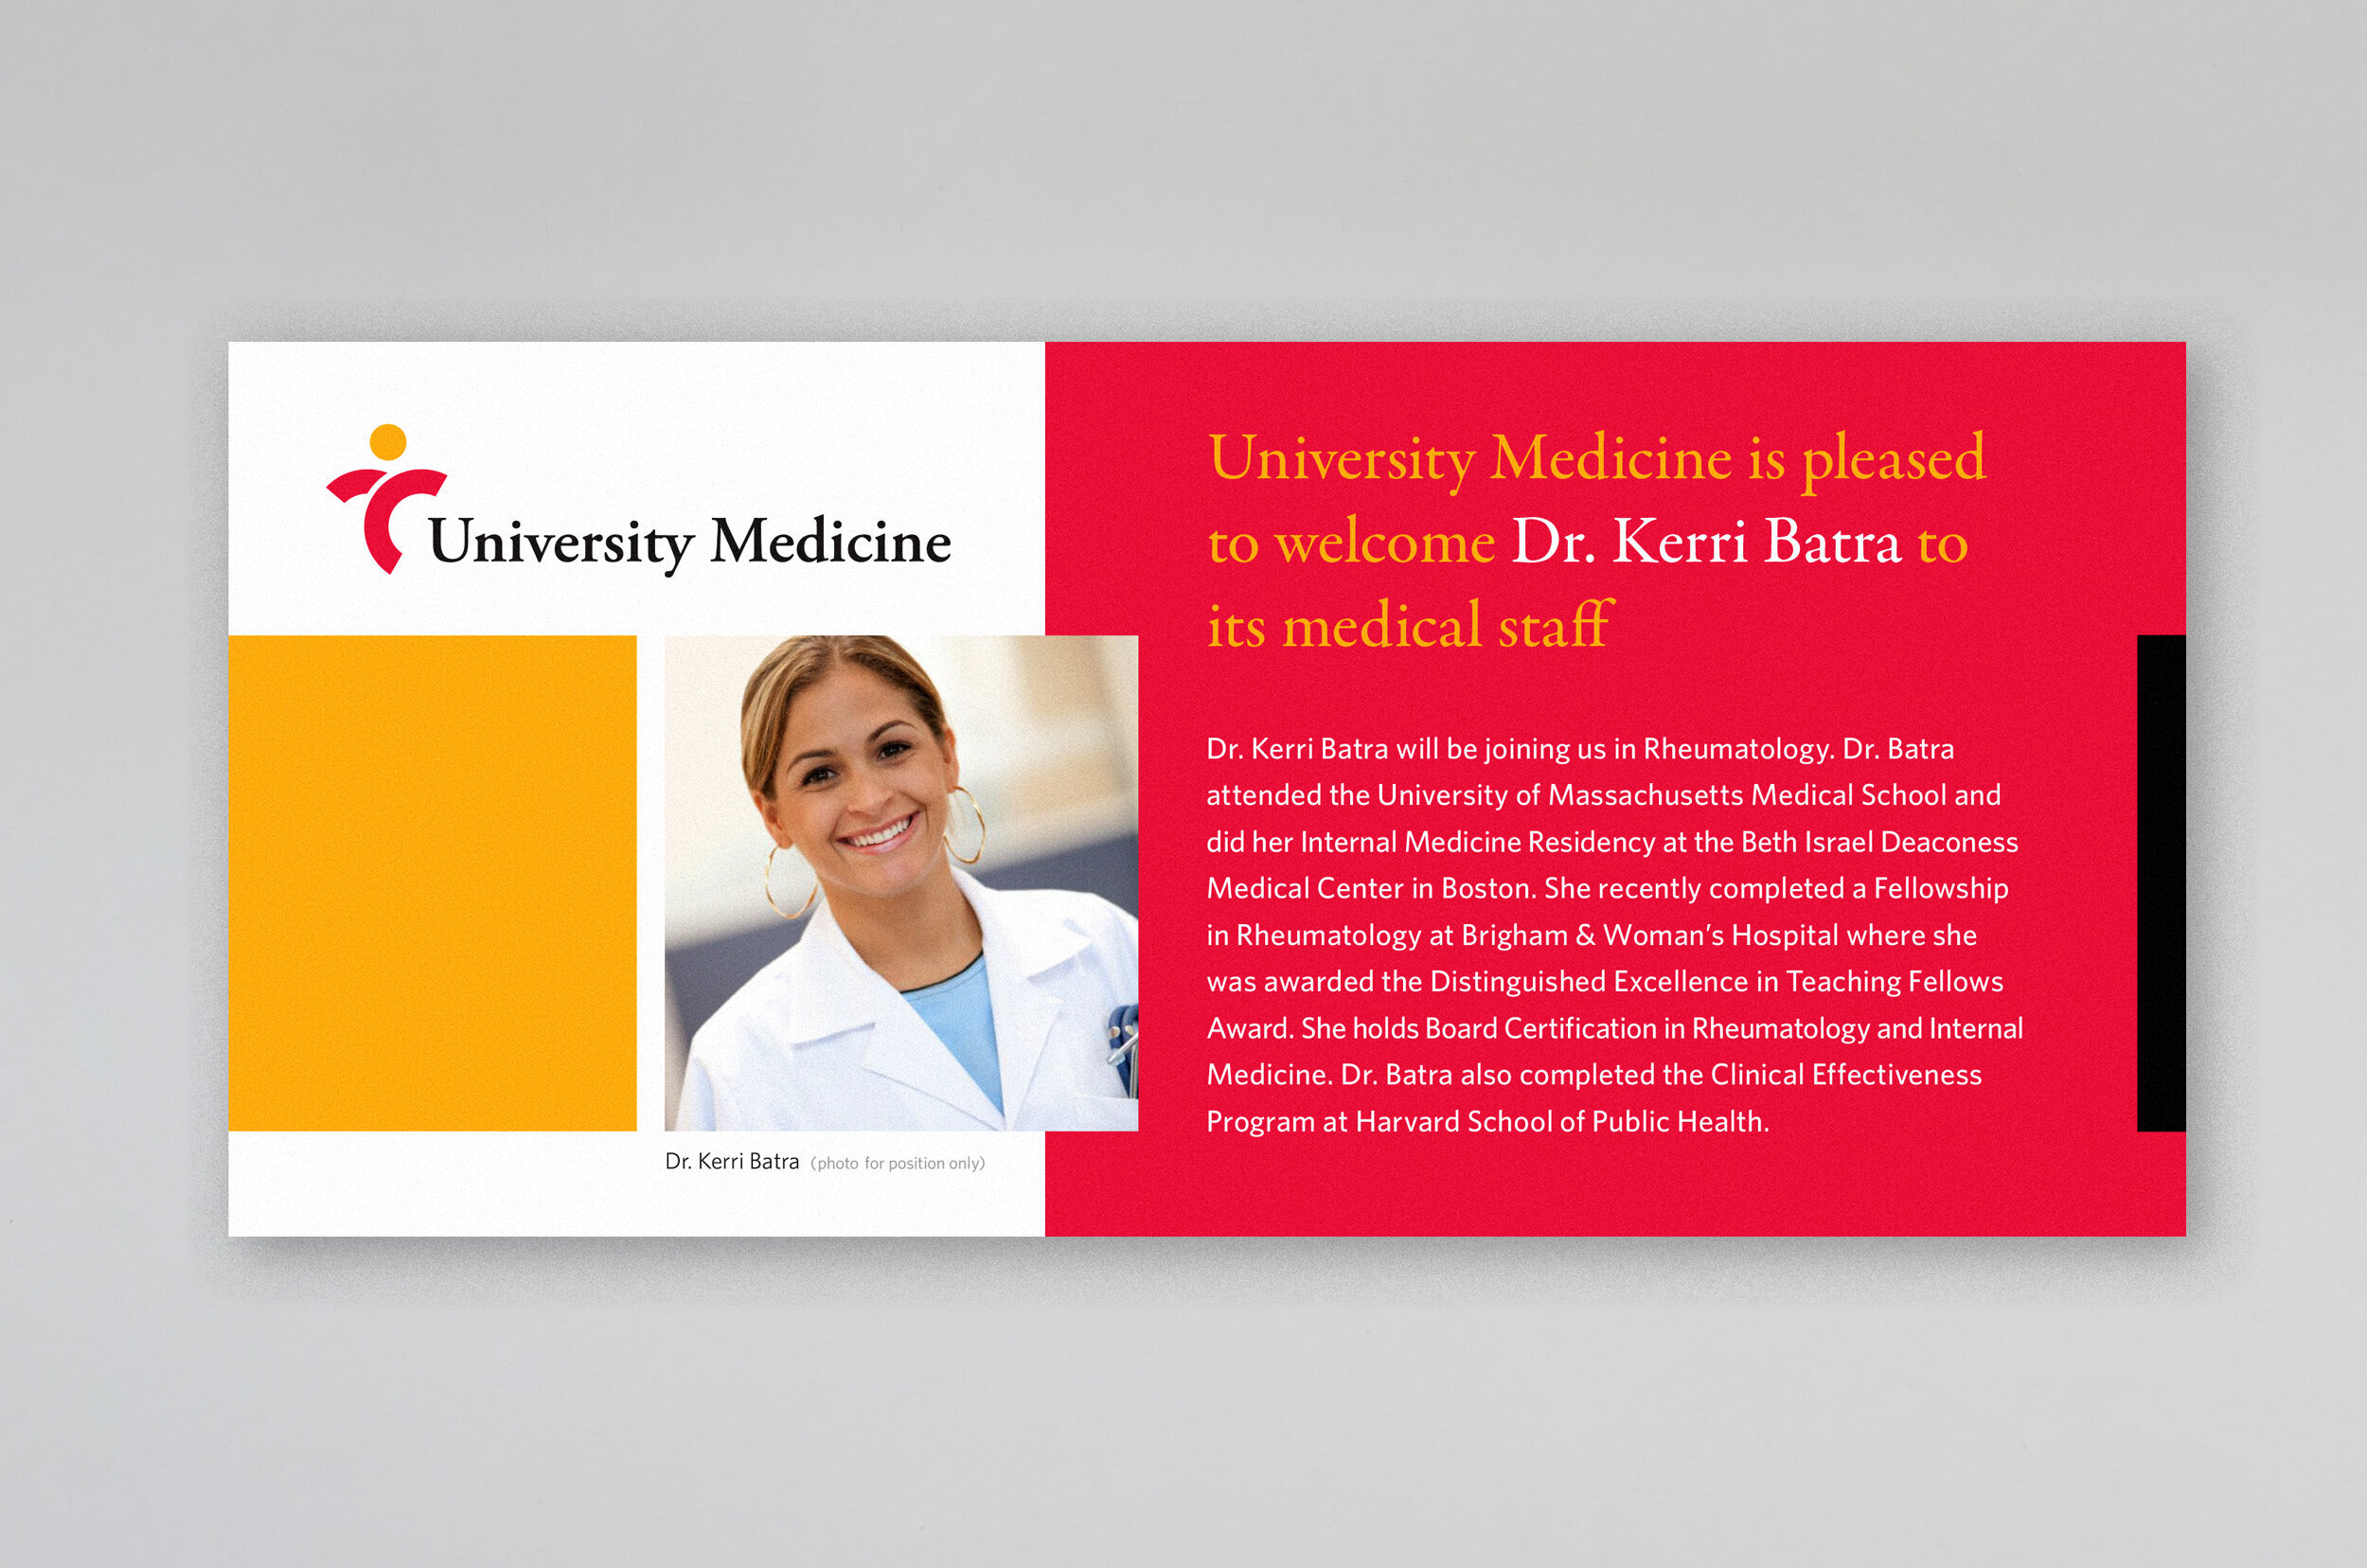   University Medicine Announcement Card  • director/designer: Michael Balint • assistant designer: Dawn Vietro 